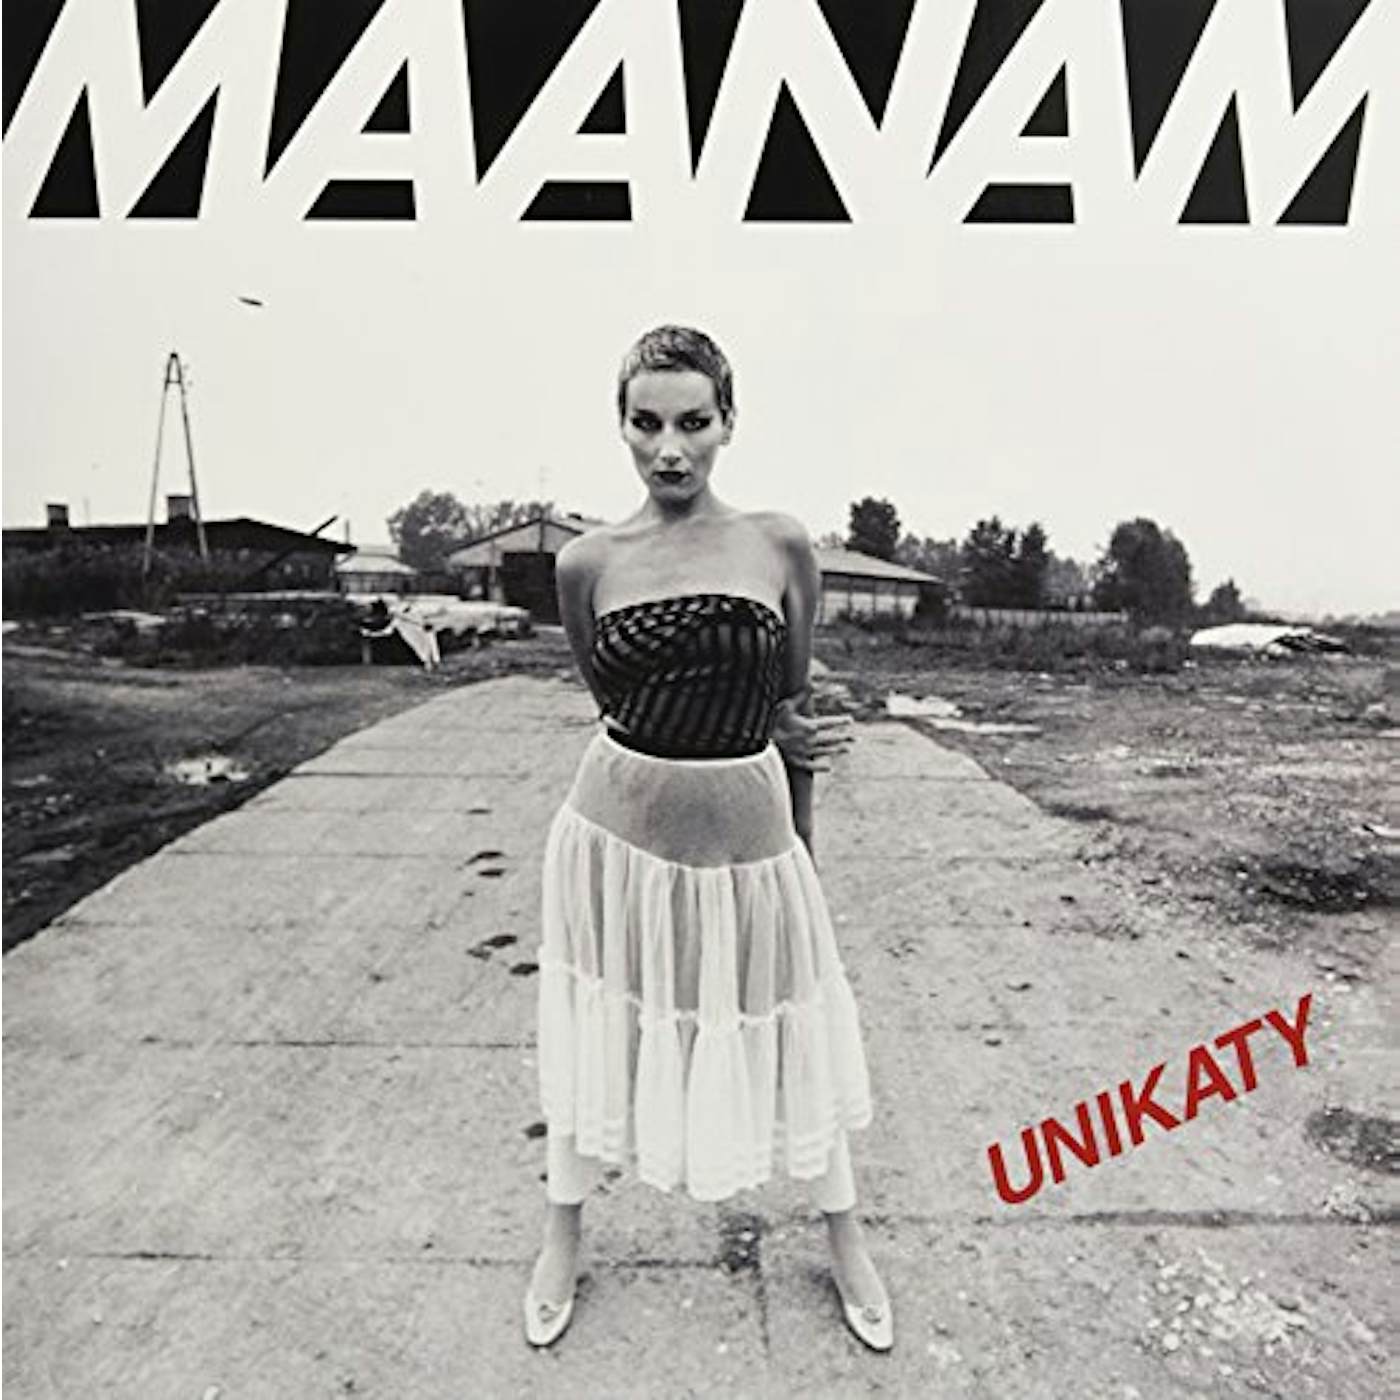 Maanam Unikaty Vinyl Record